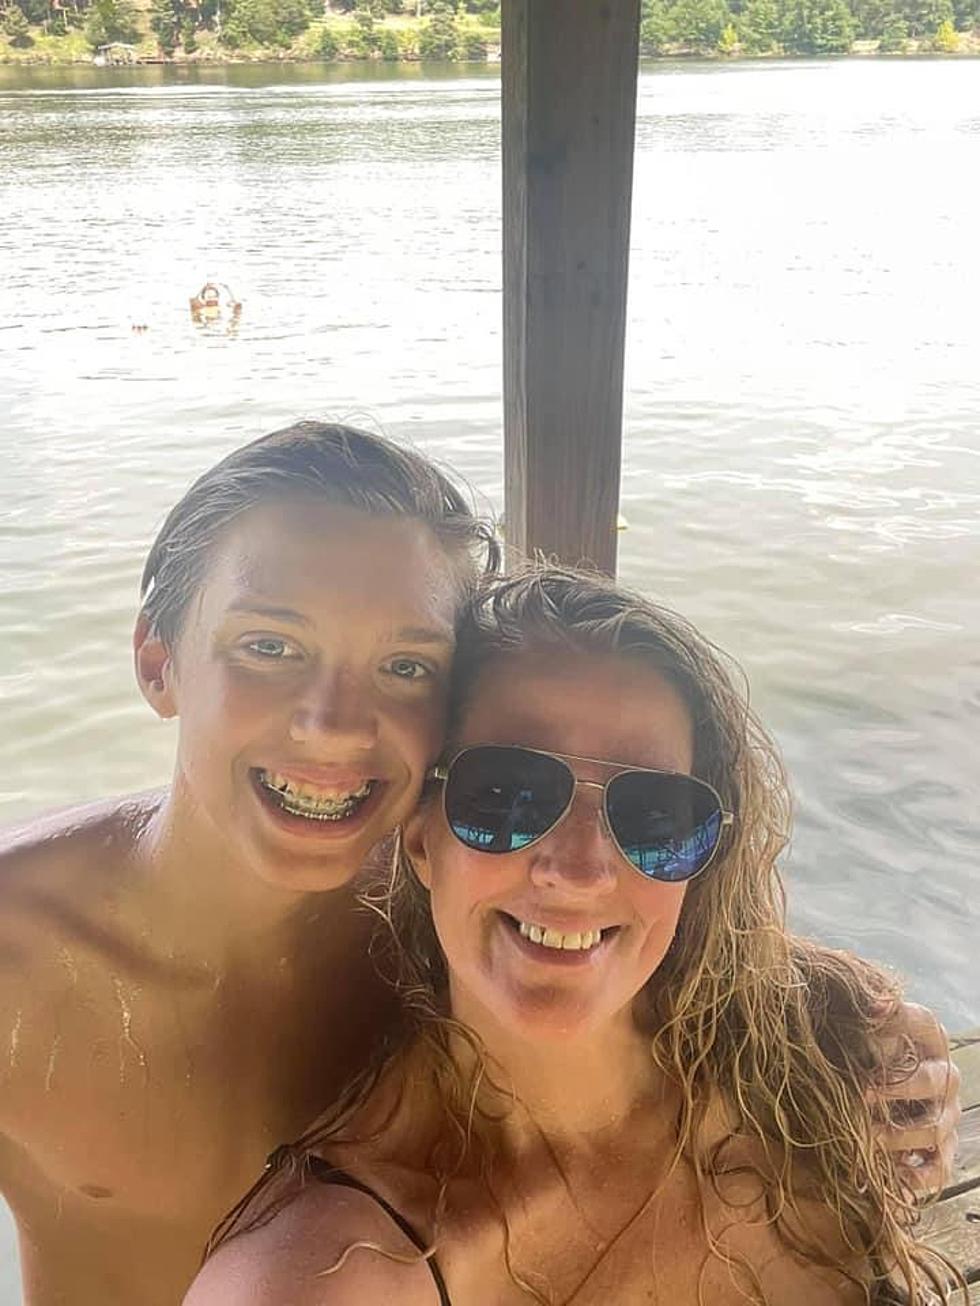 Update: Kara Talks About Her Creepy Lake Tuscaloosa Picture